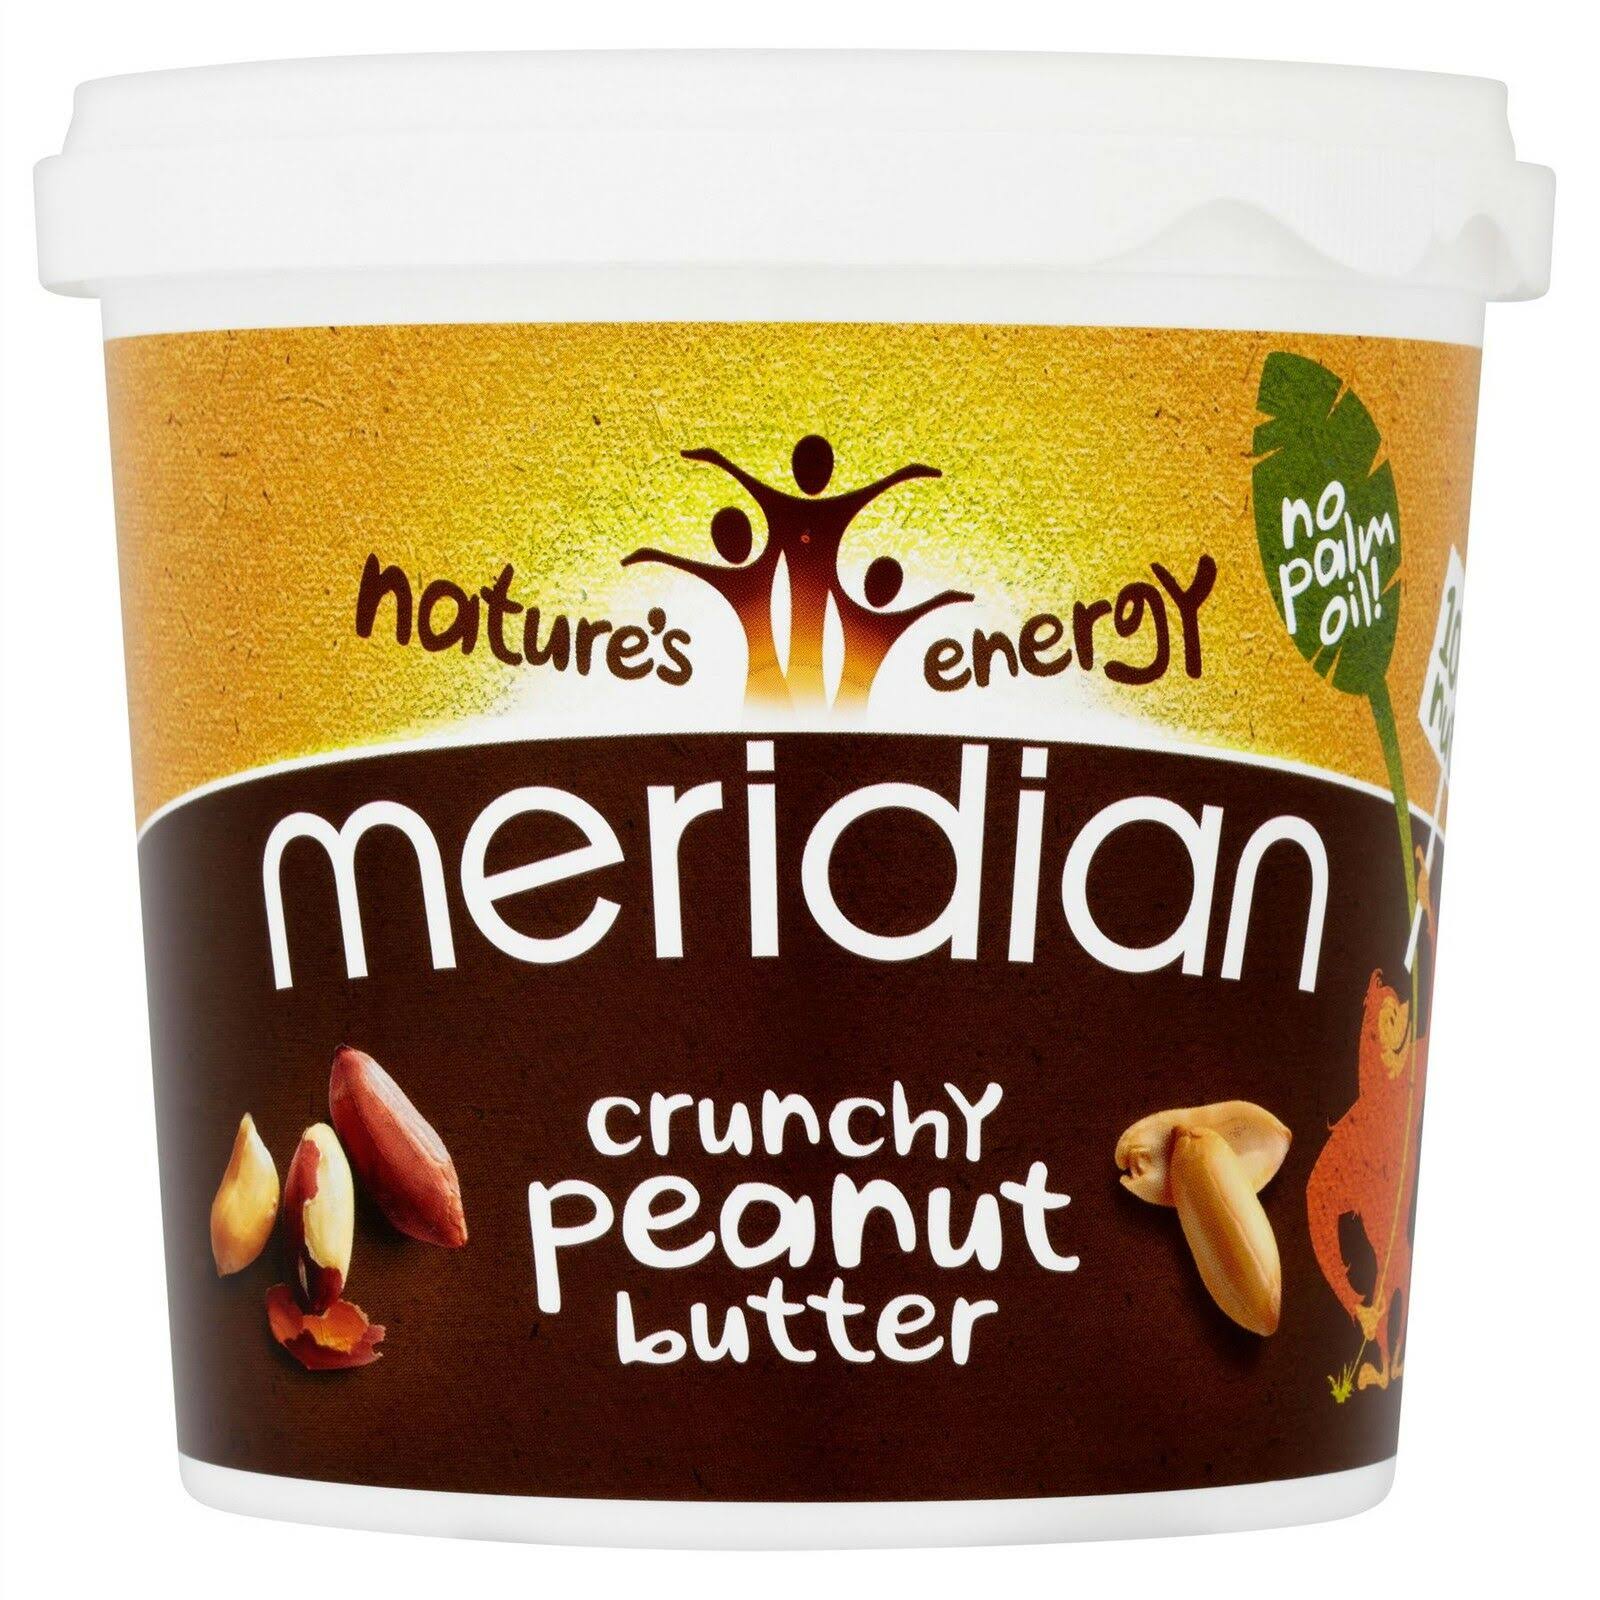 Meridian Crunchy Peanut Butter - 1kg